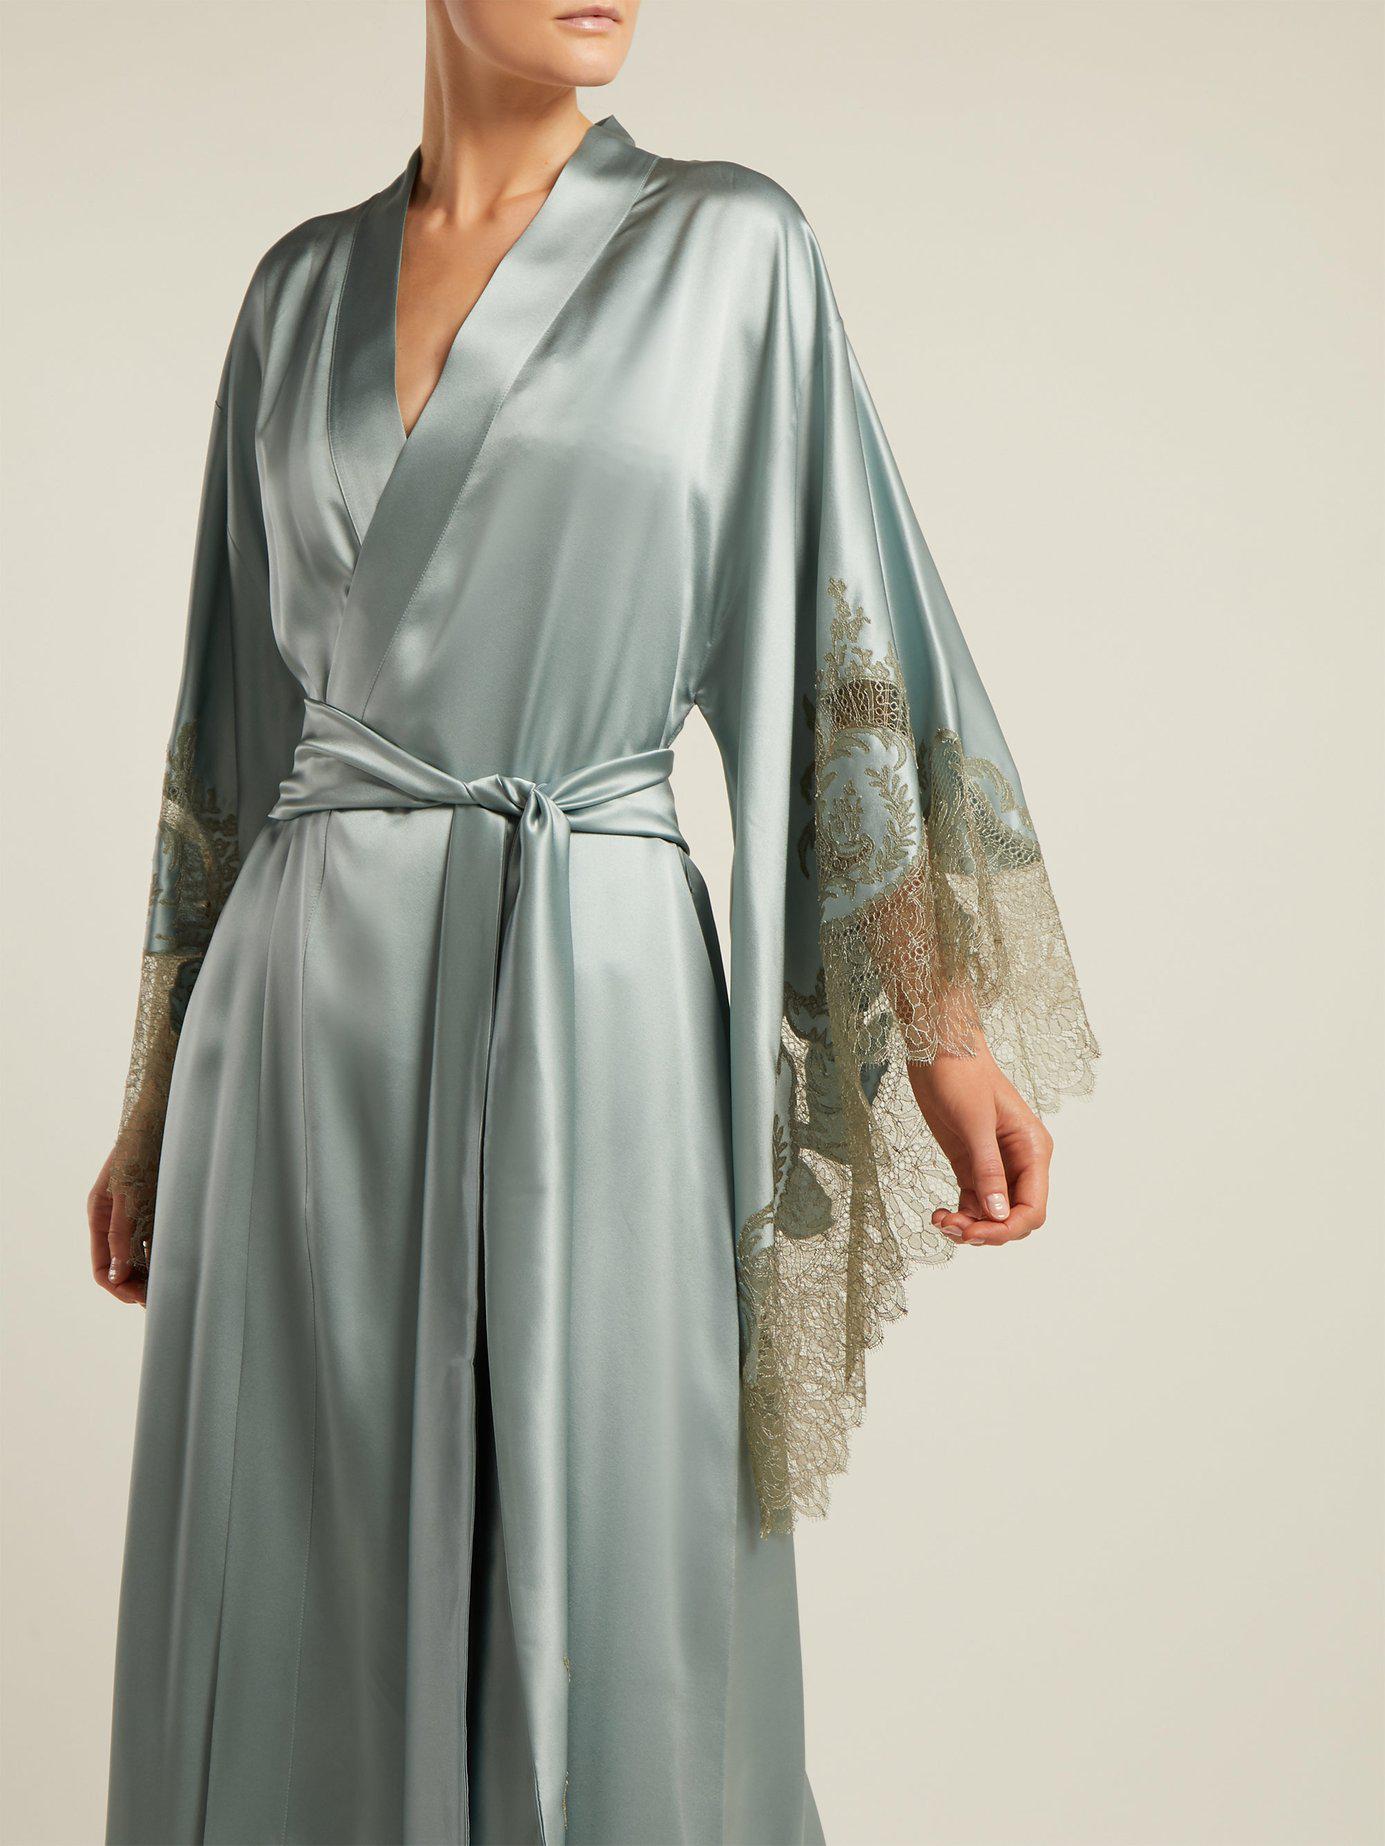 Carine Gilson Lace Trimmed Silk Kimono Robe in Light Blue (Blue) | Lyst